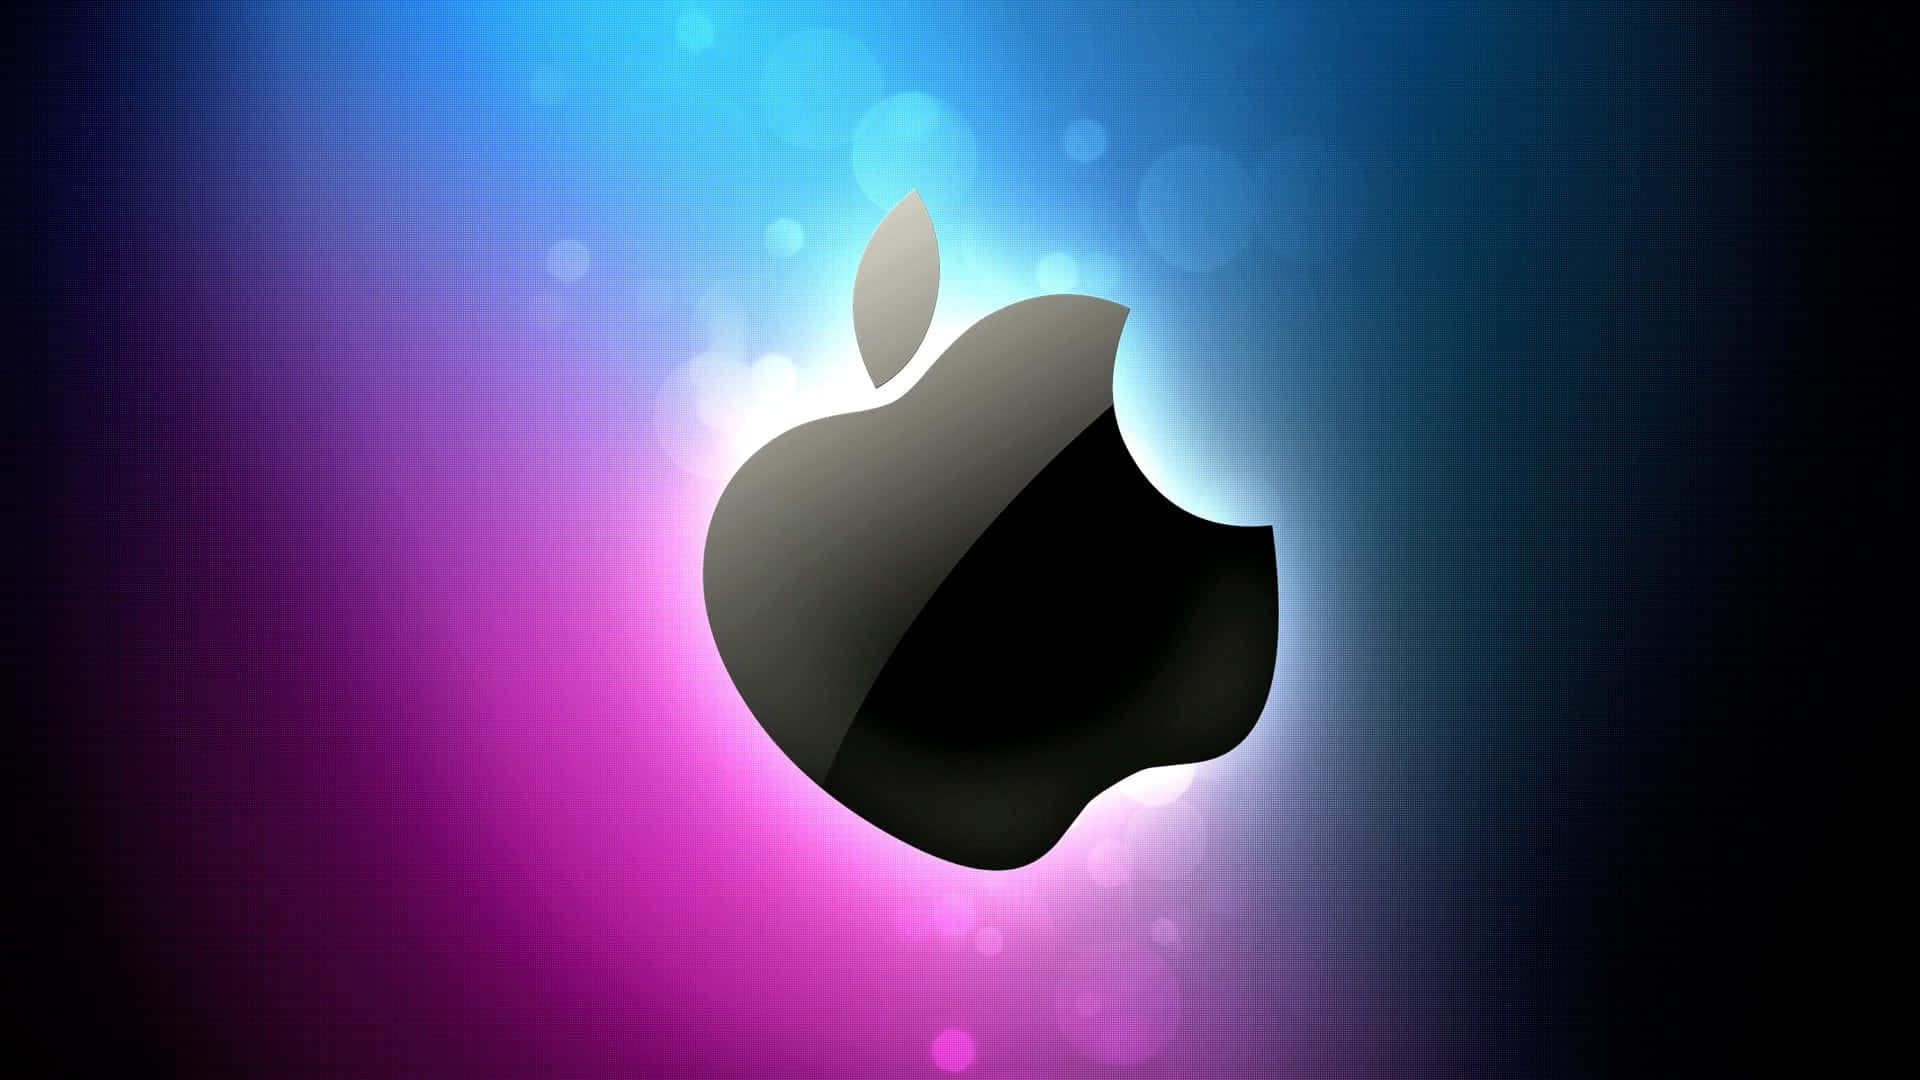 Black Apple Logo In Purple And Blue Wallpaper